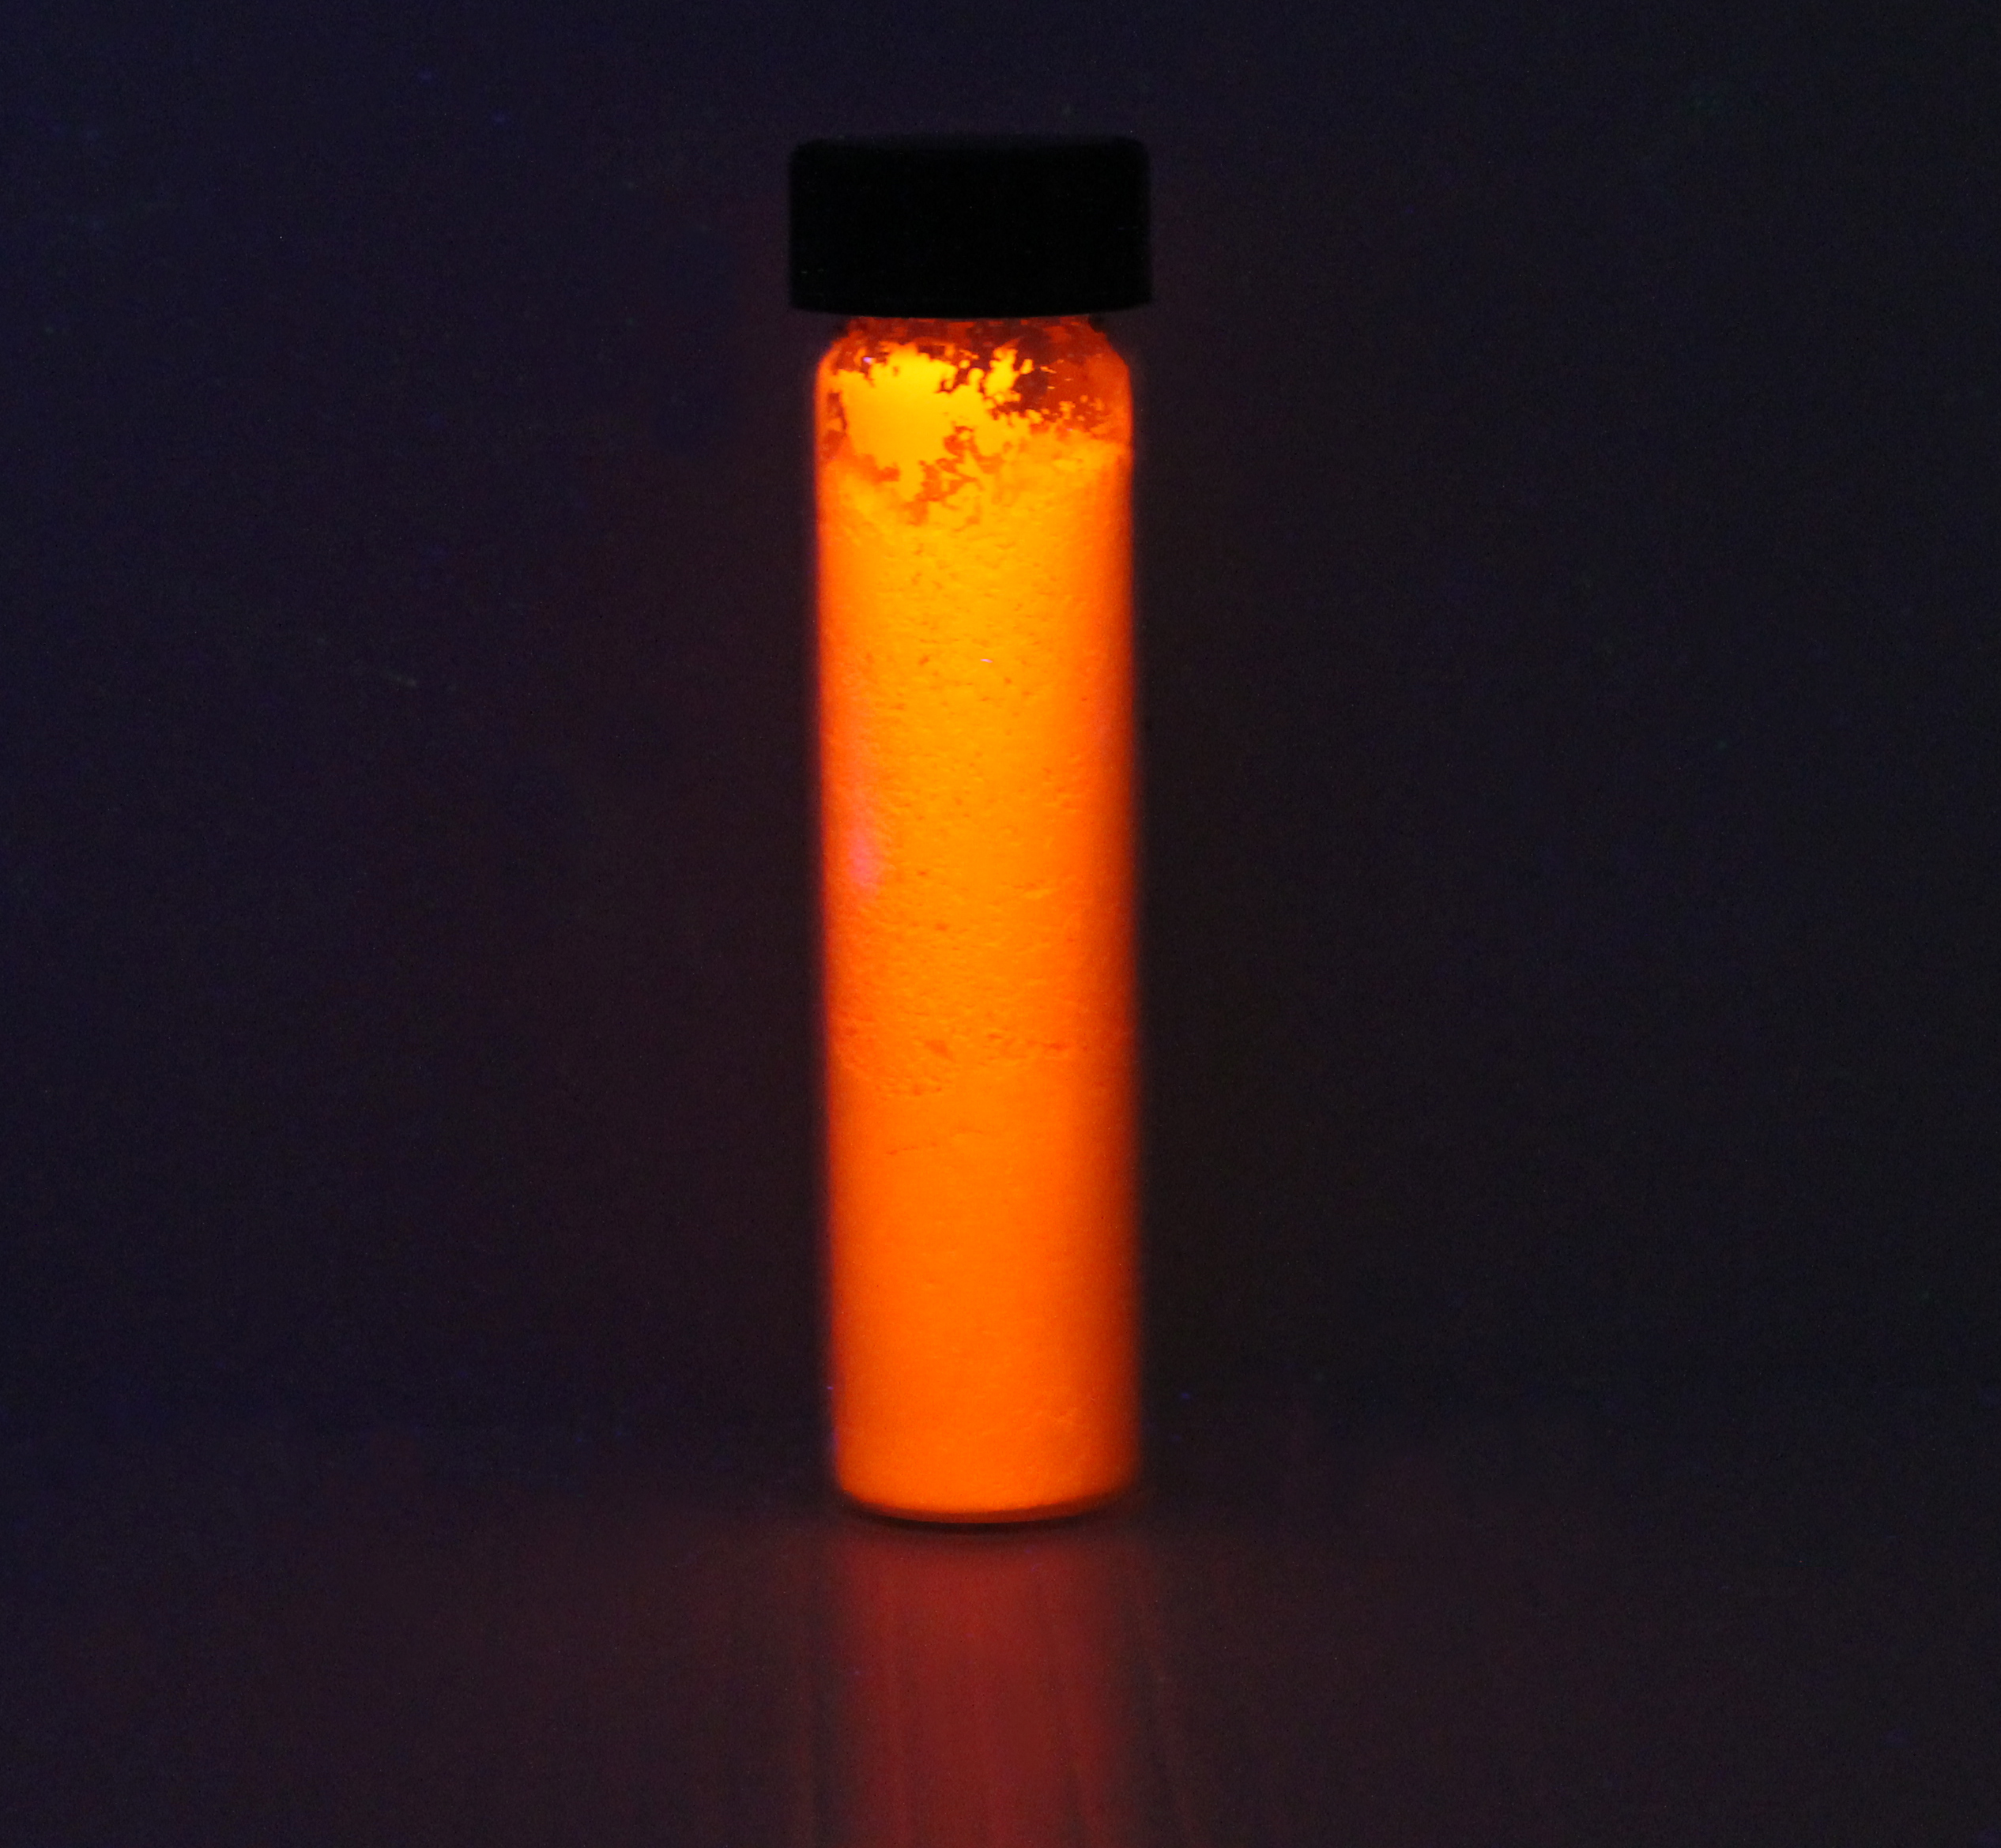 Strontium Sulfide under UV illumination